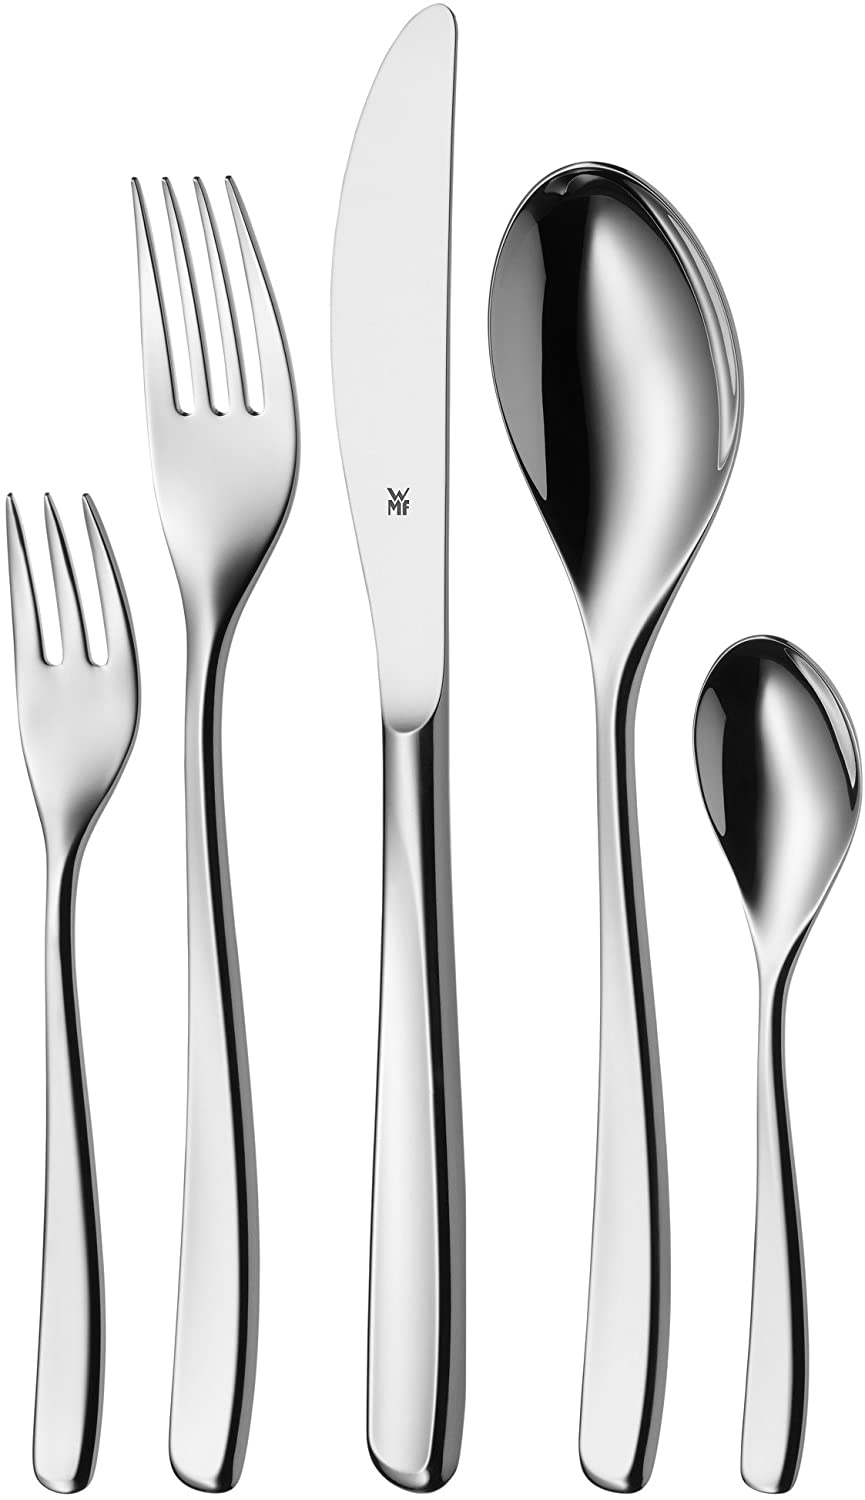 WMF Sinus cutlery set, 12 people, 60 pieces, monobloc knife, polished Cromargan stainless steel, shiny, dishwasher safe